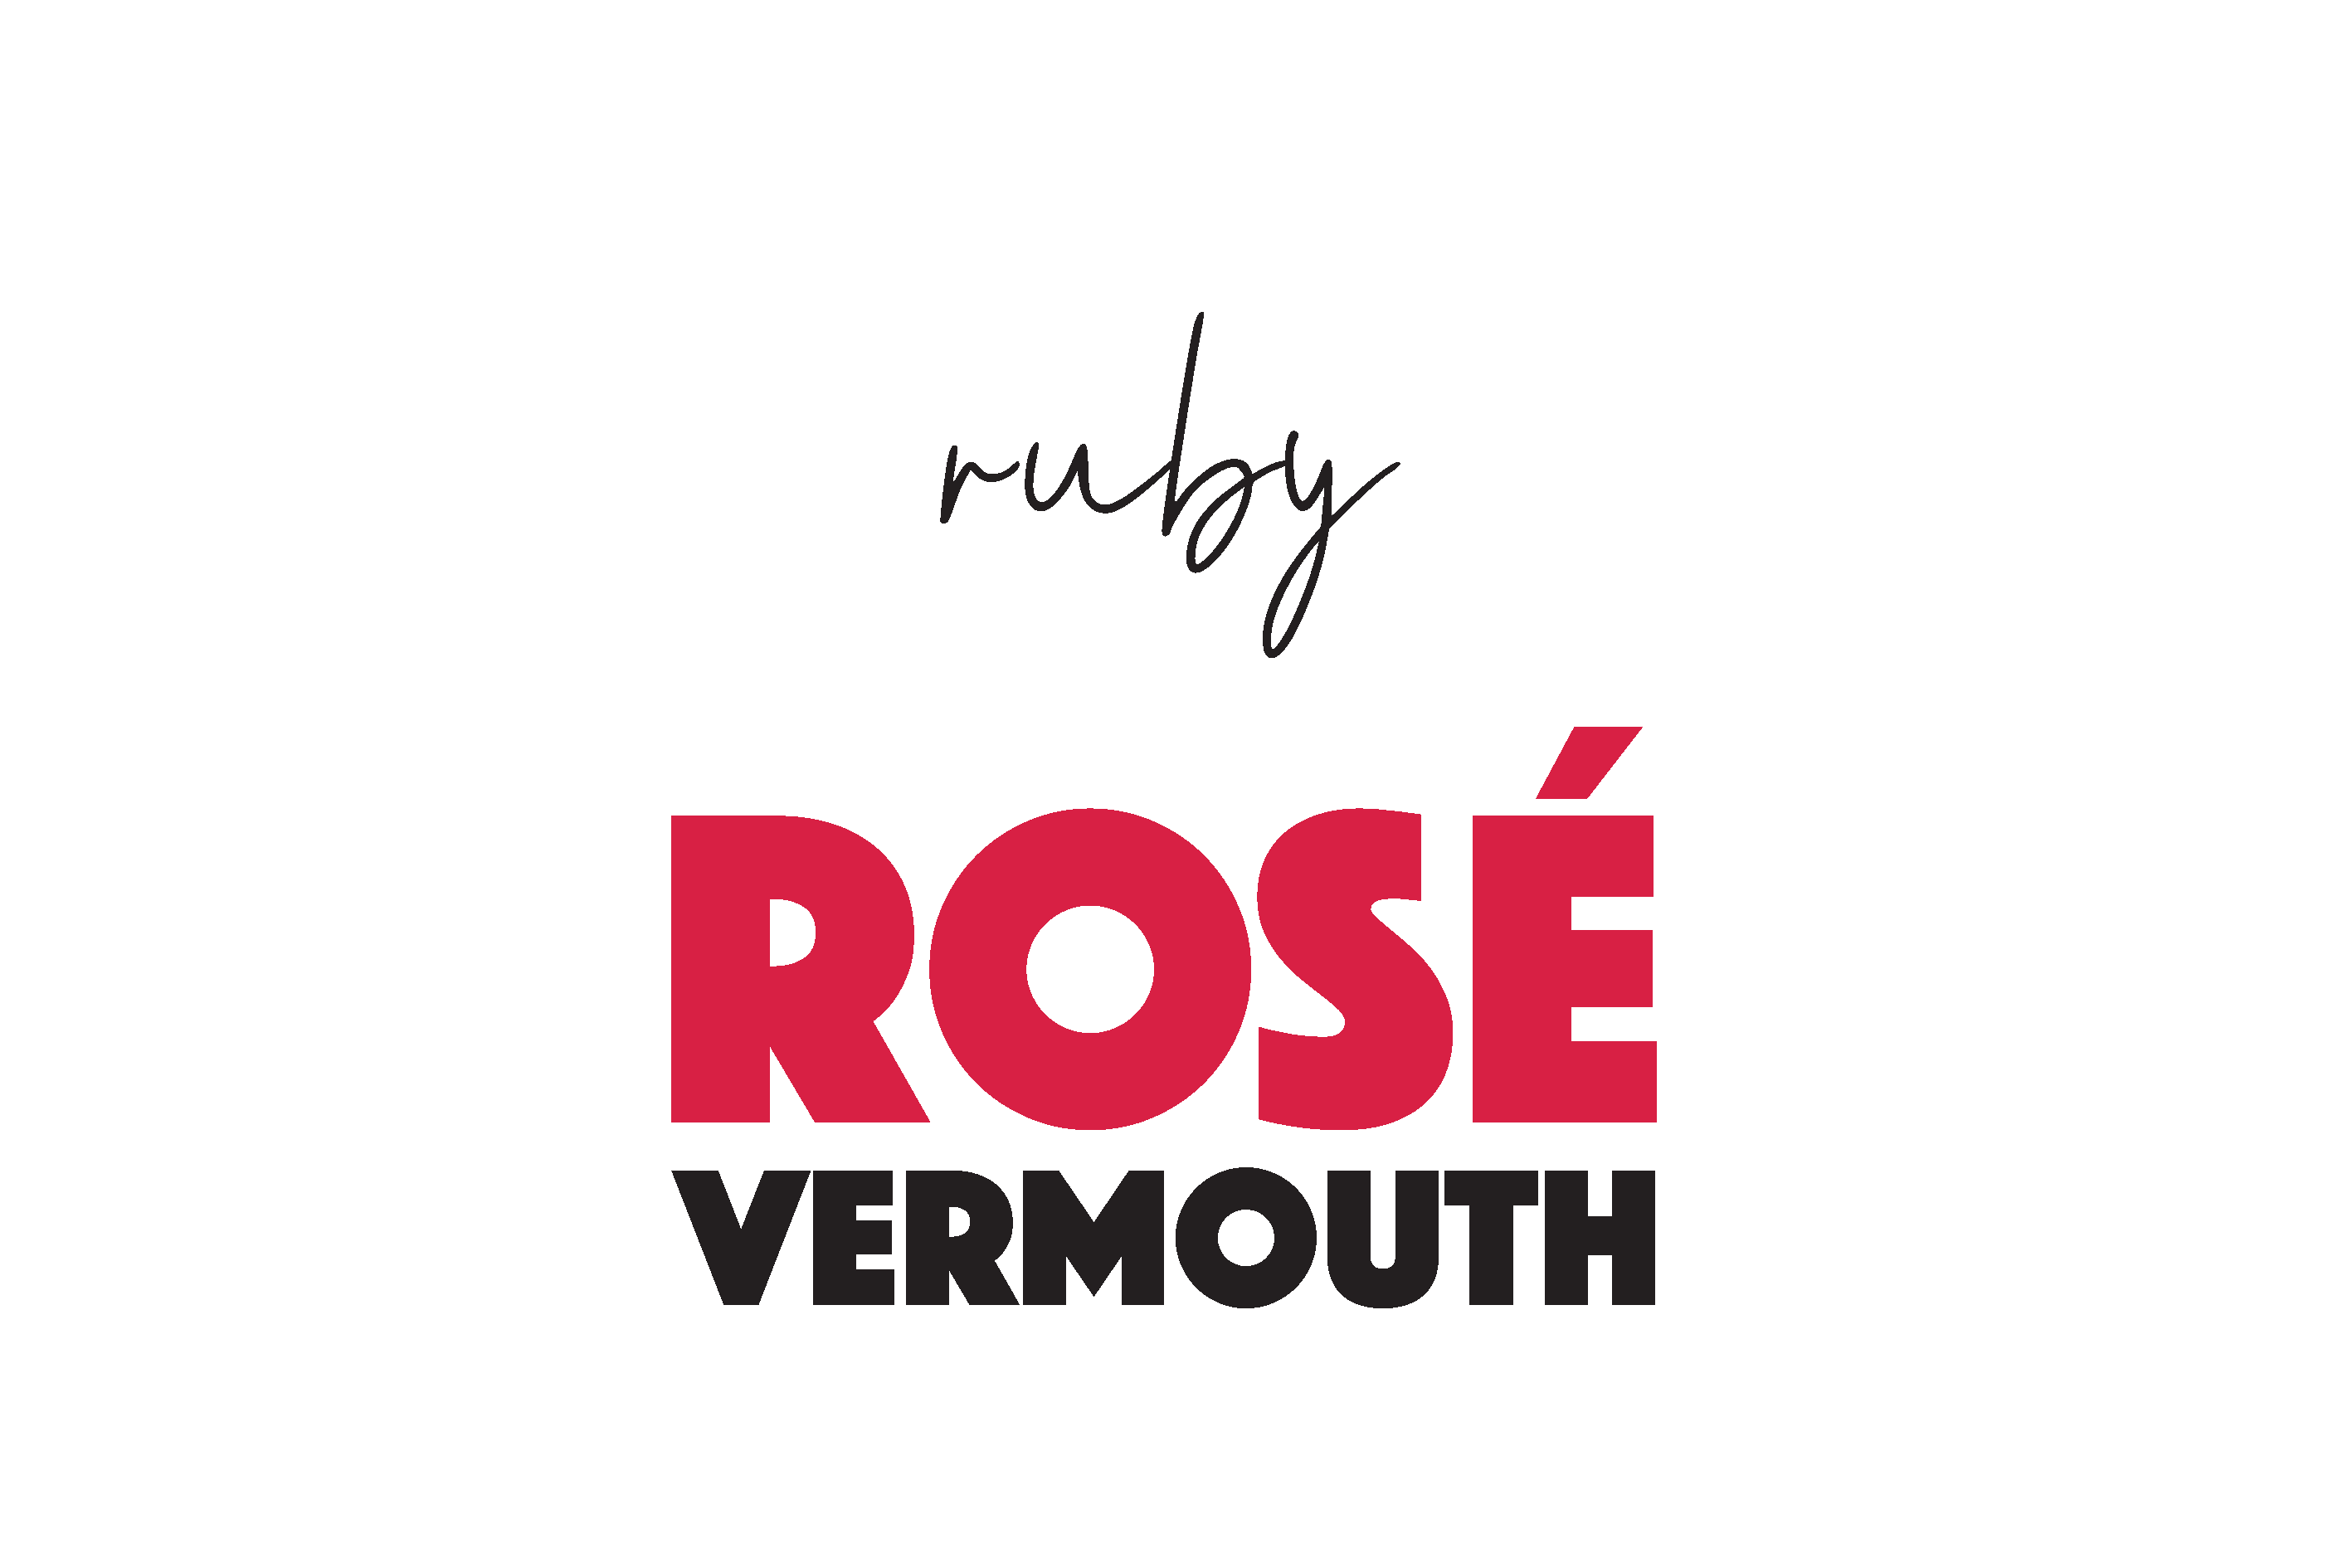 Ruby Rose Vermuth